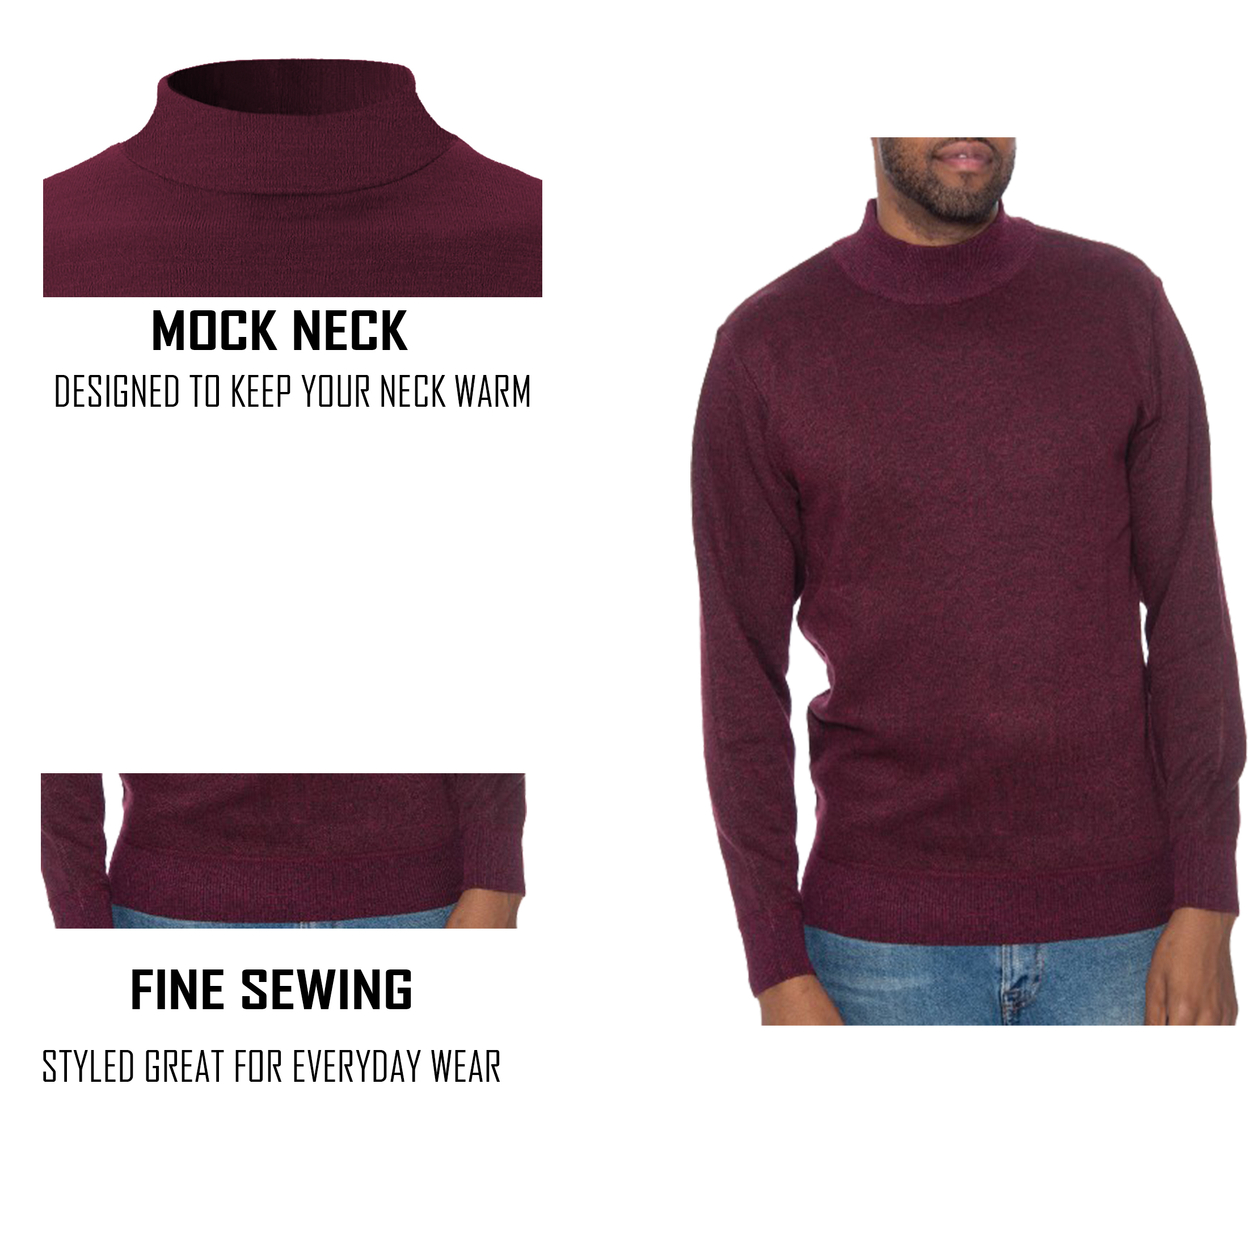 2-Pack: Men's Winter Warm Cozy Knit Slim Fit Mock Neck Sweater - White & Burgundy, Medium